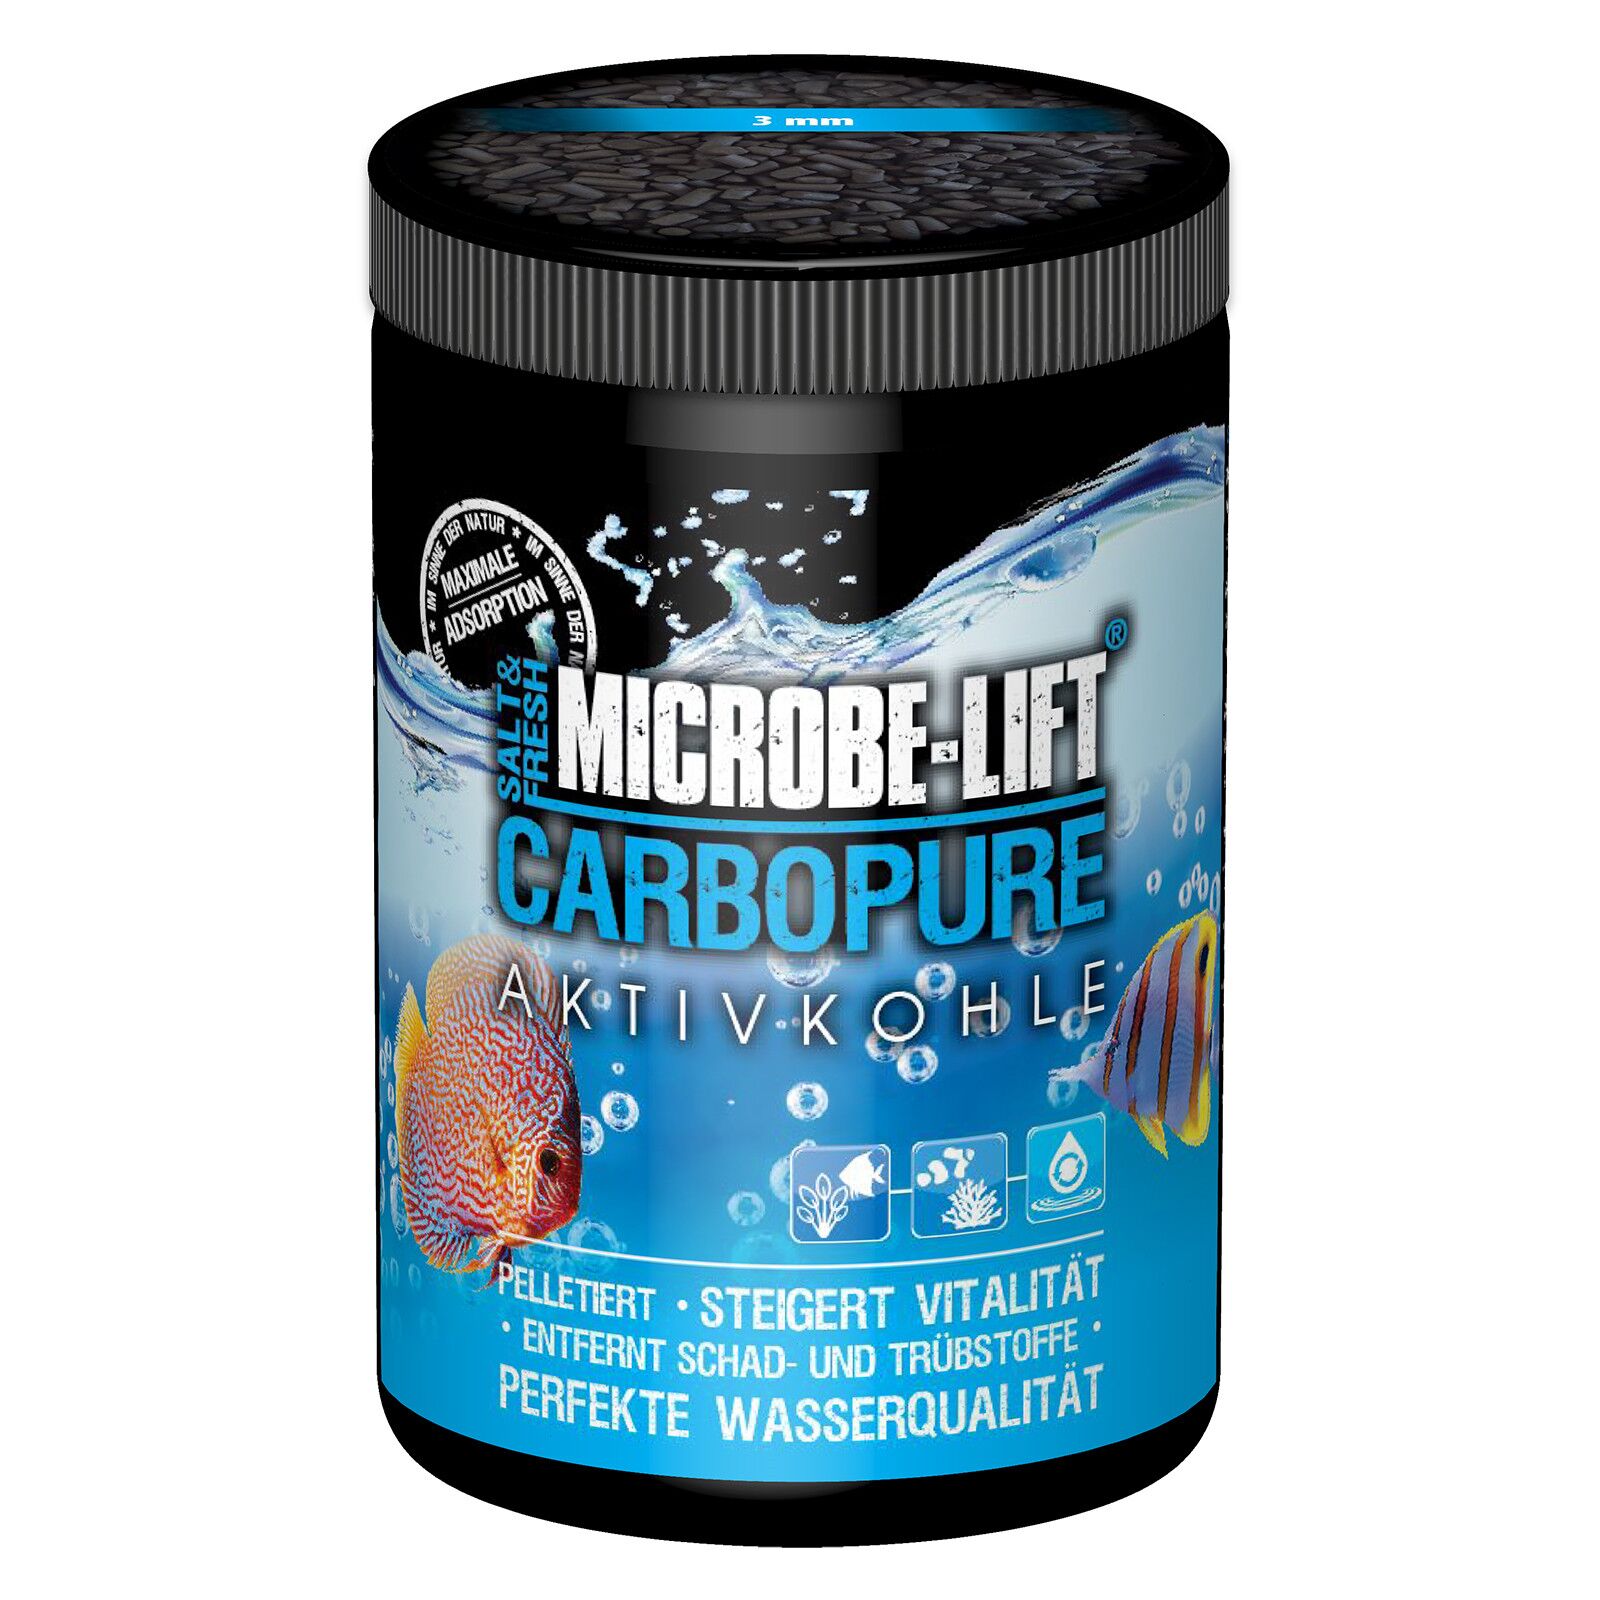 Microbe-Lift - Carbopure - Aktivkohle